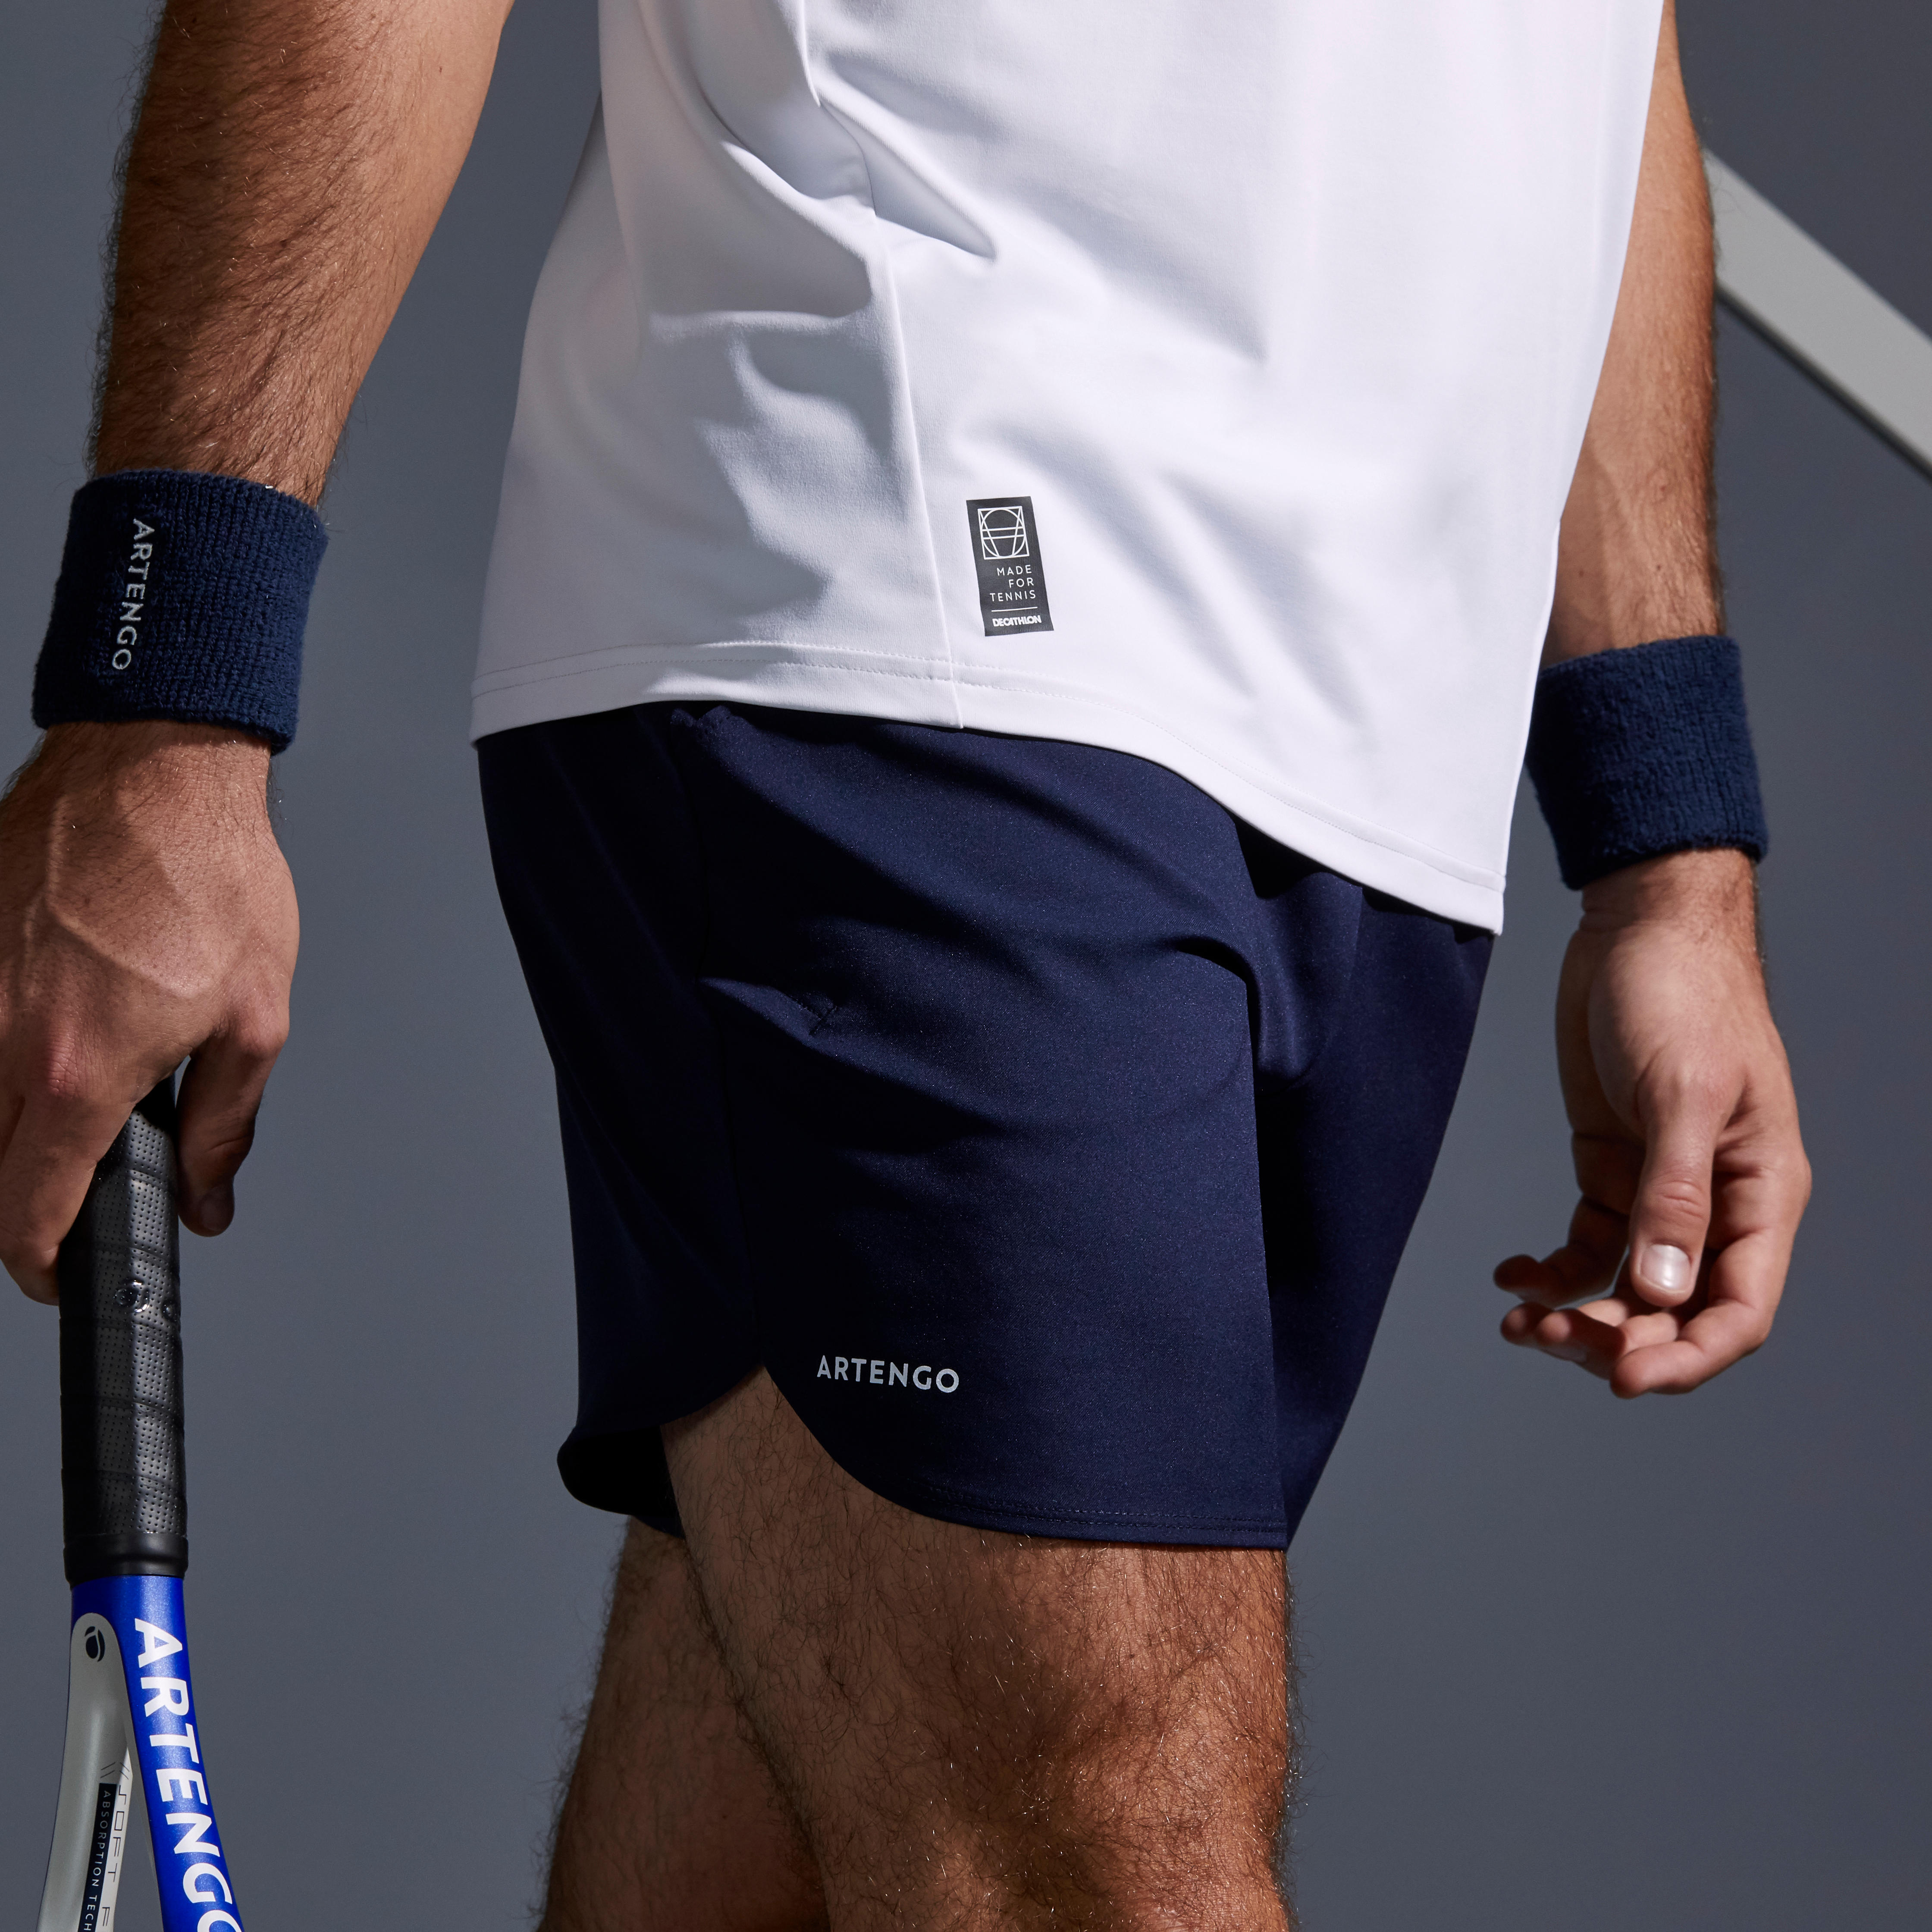 decathlon tennis clothes